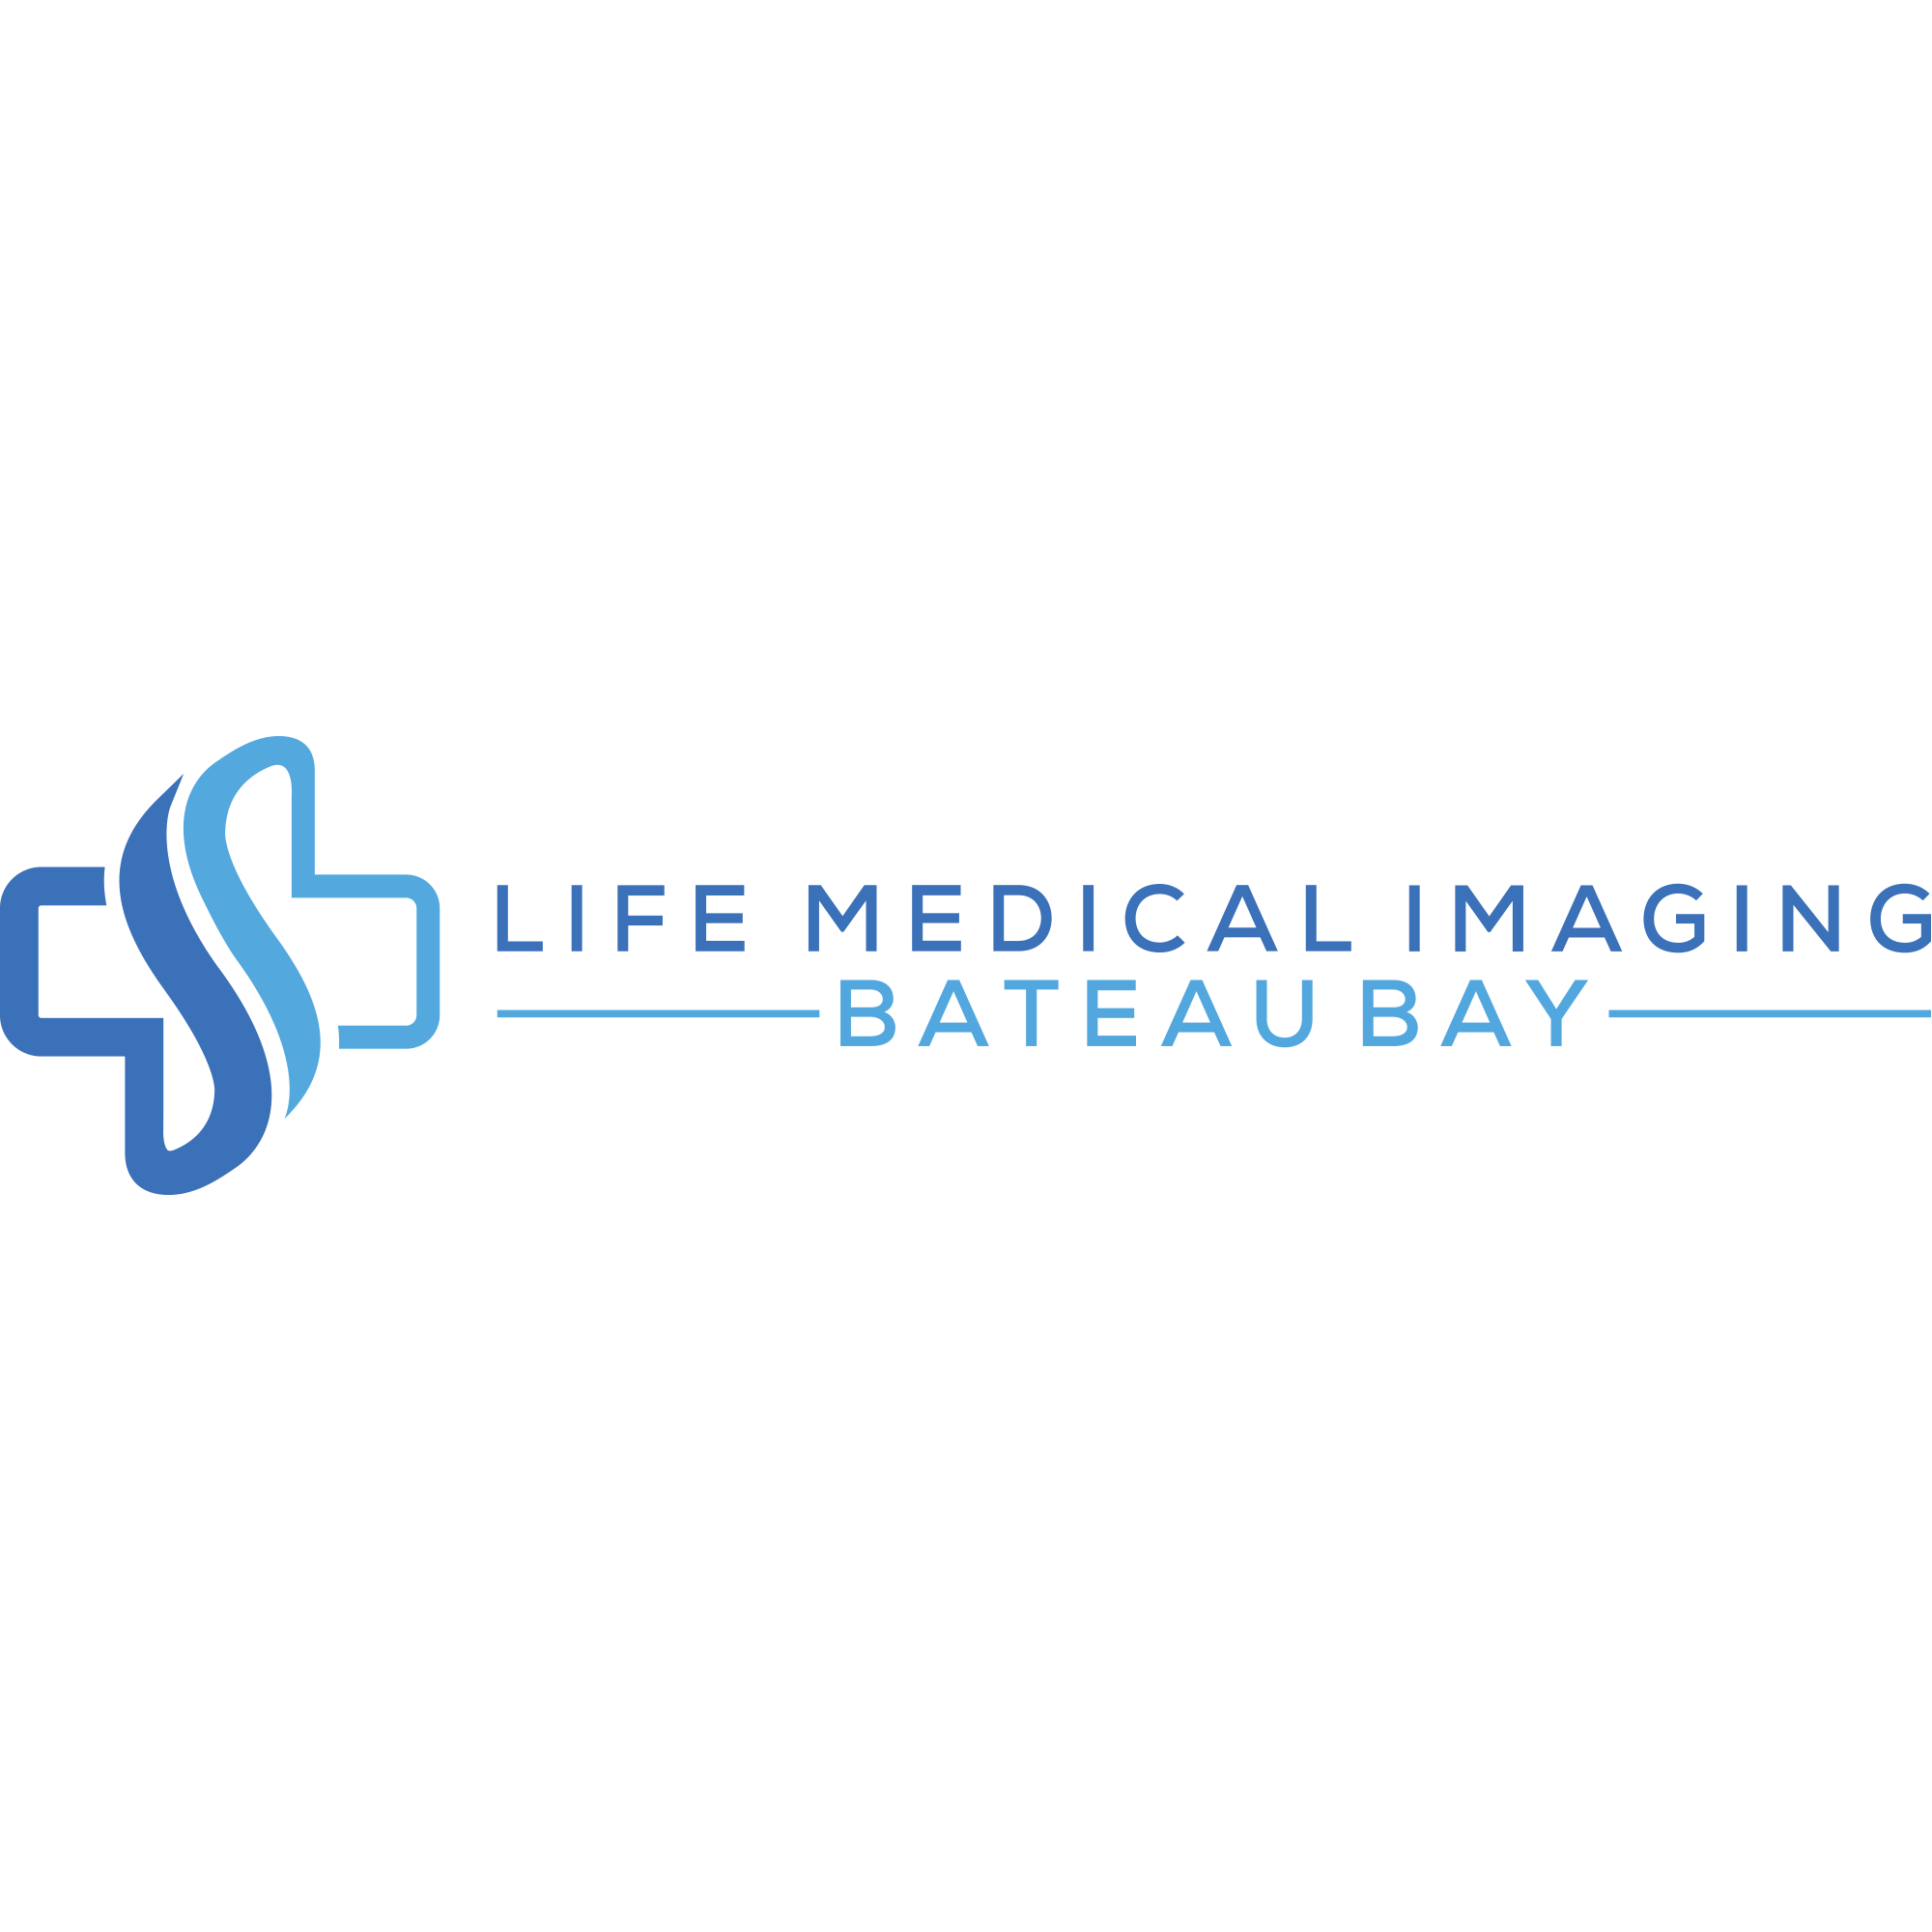 Life Medical Imaging - Bateau Bay Logo